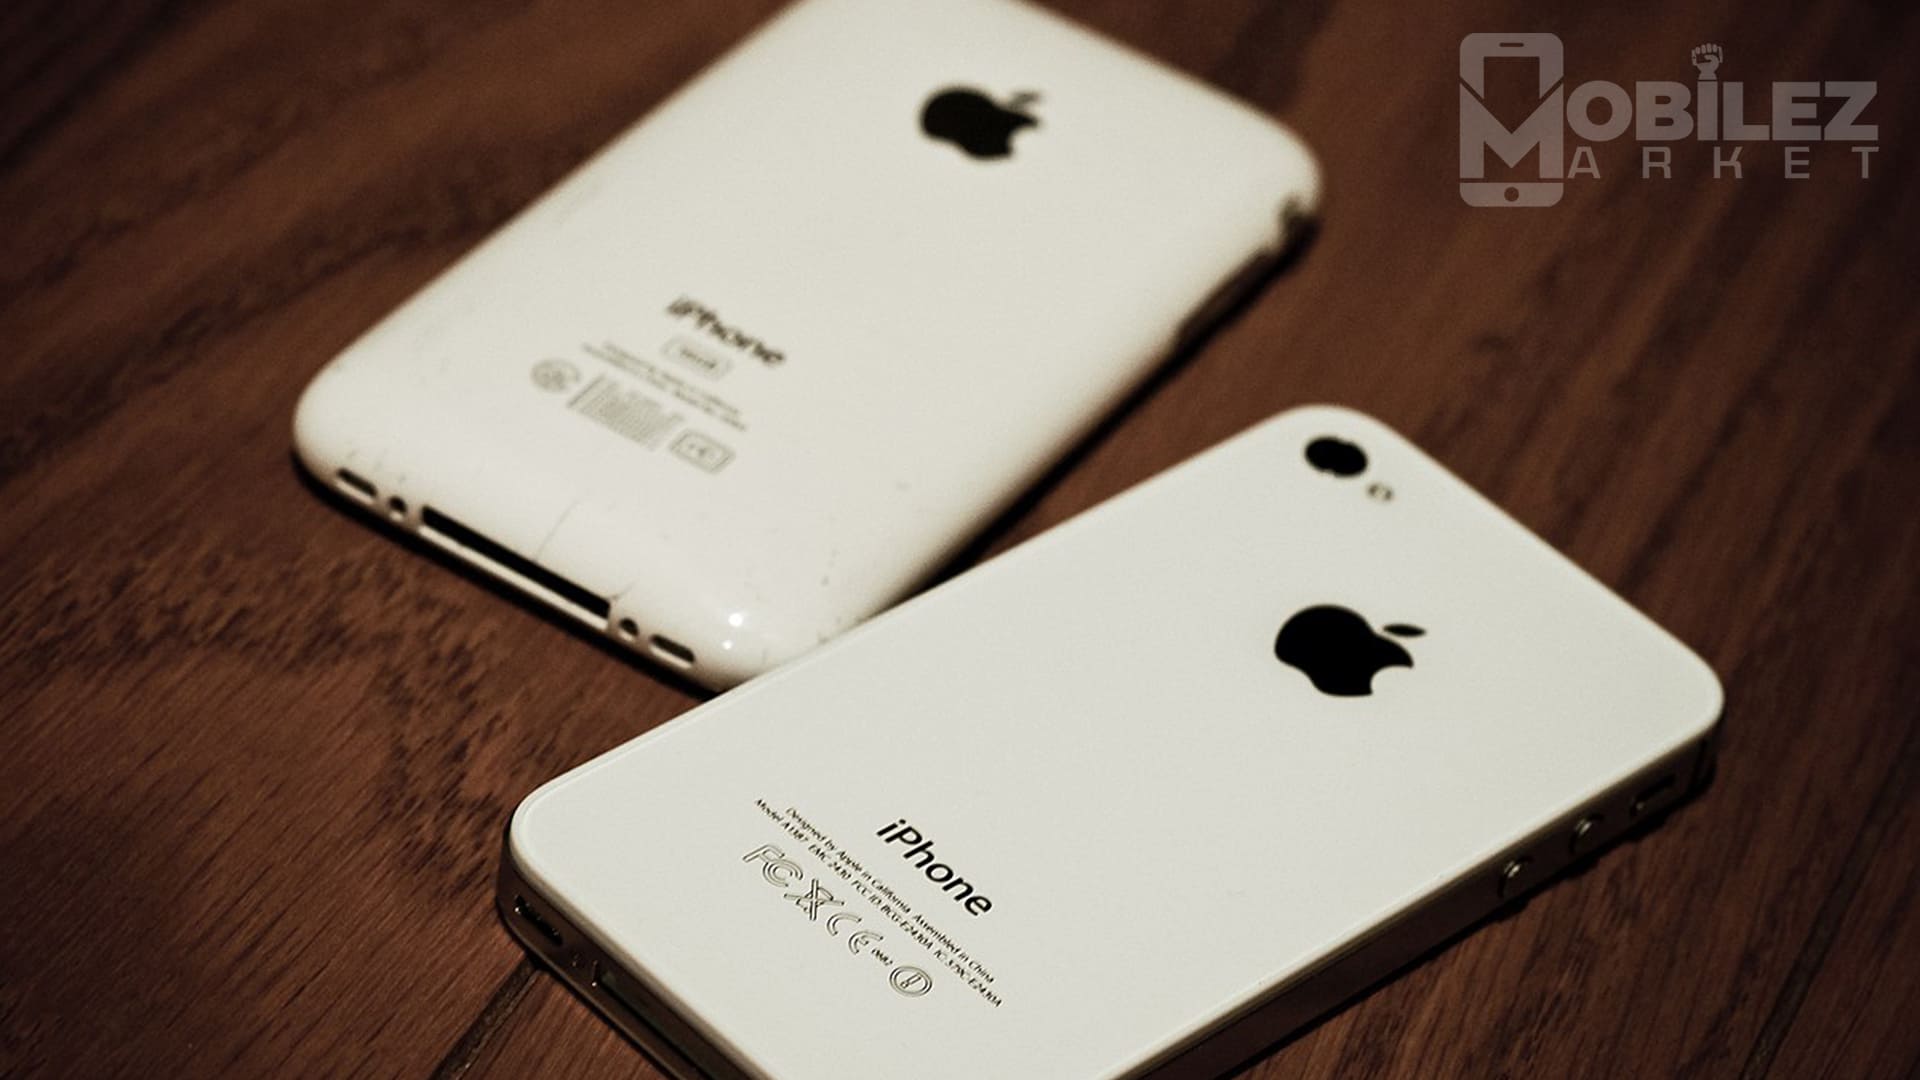 iPhone 4s Lowest Price Buy Online | iPhone 4s Refurbished Buy Online